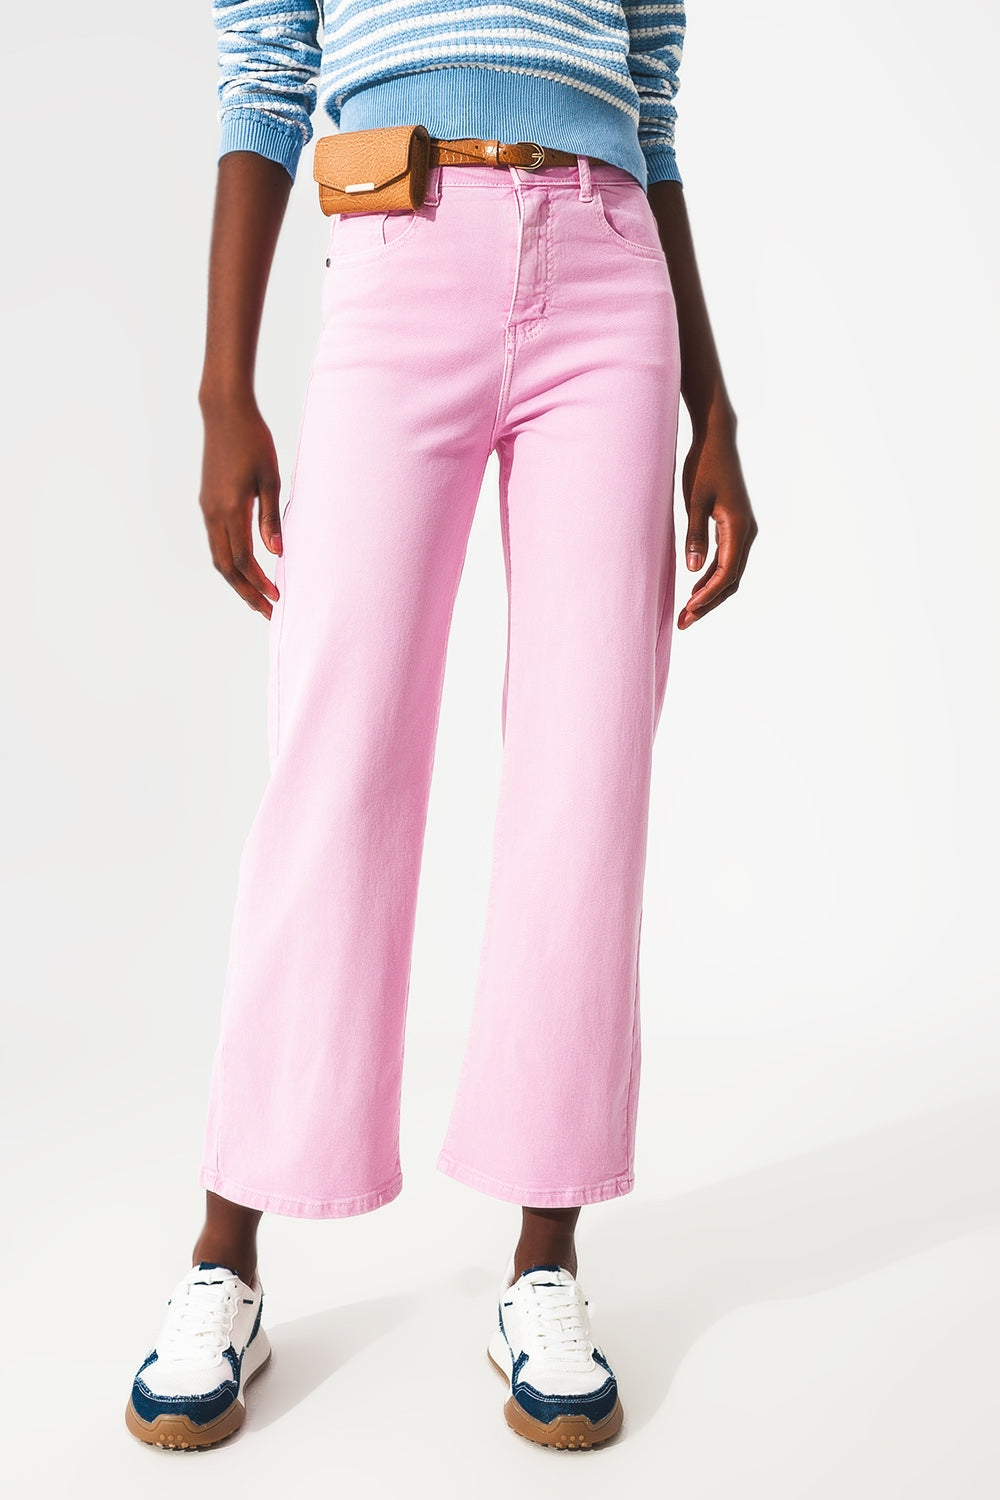 Q2 Cropped wide leg jeans in bubblegum pink